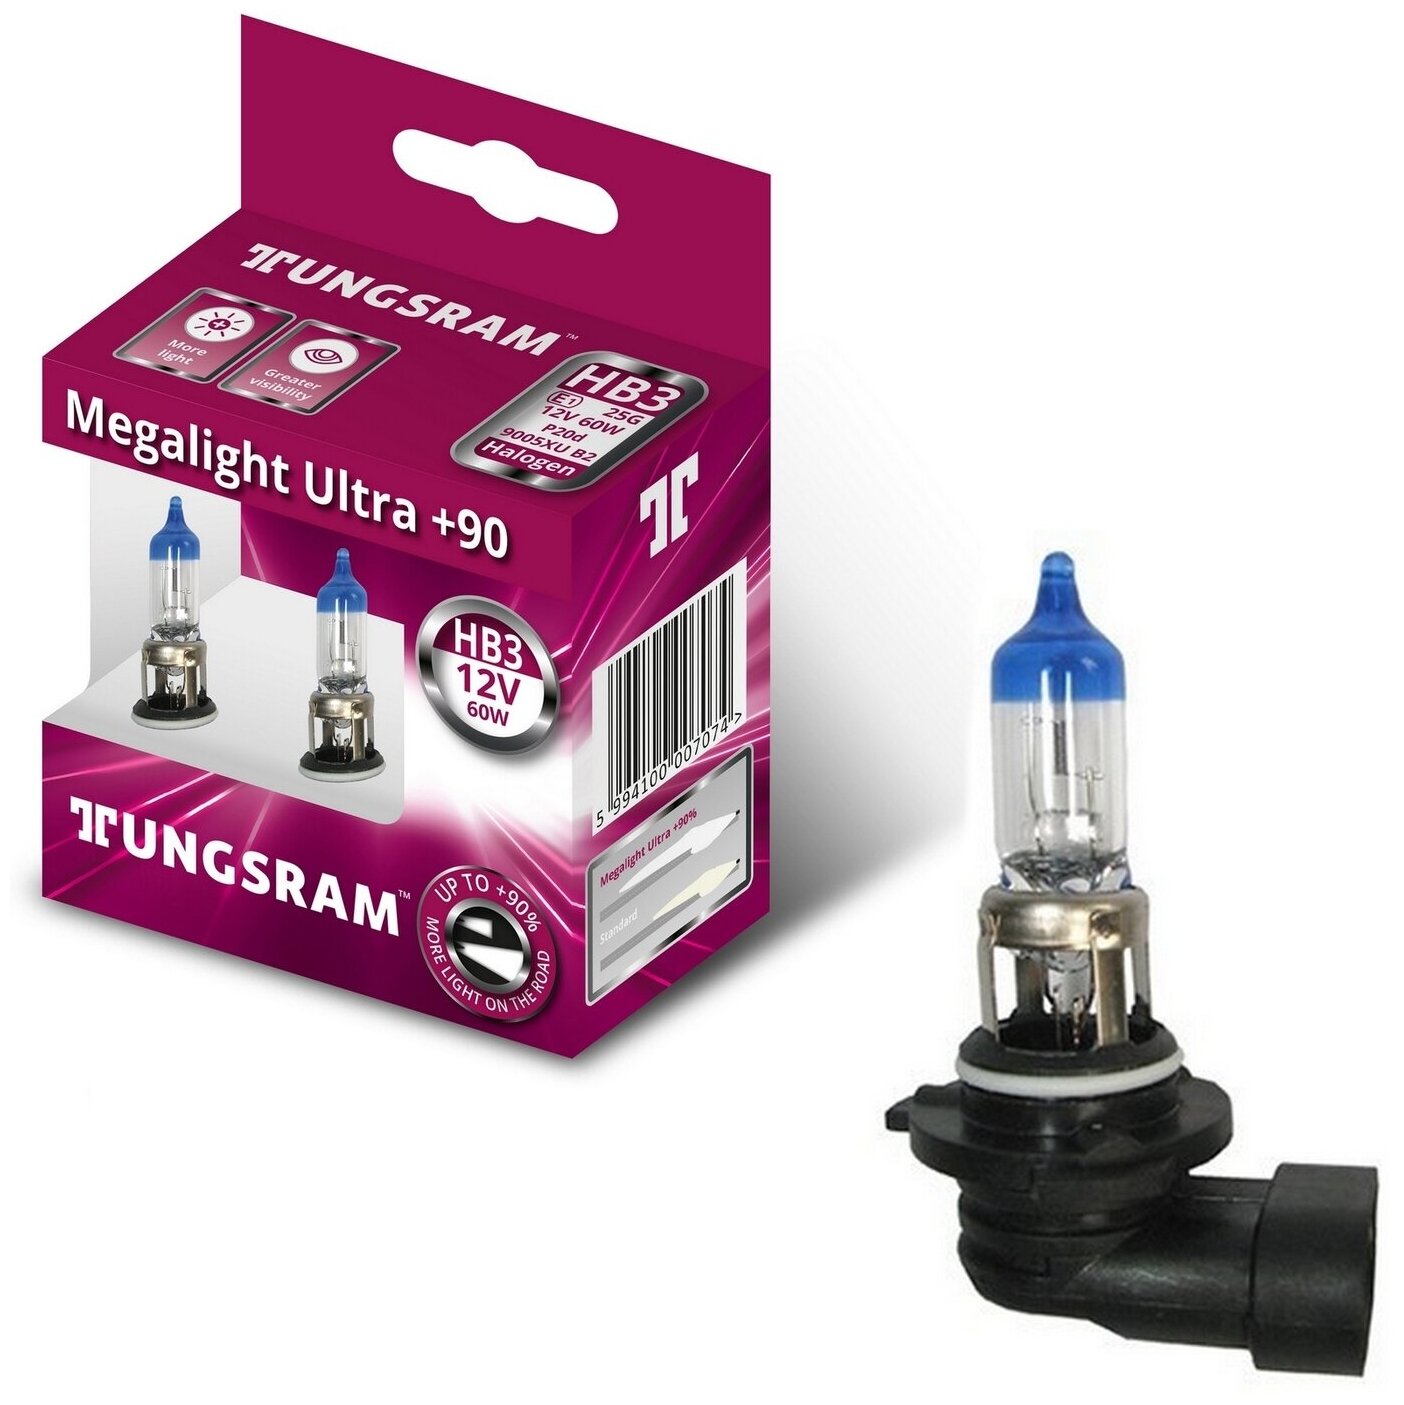 Лампы TUNGSRAM "Megalight Ultra +90", HB3, +90%, 12V, 60W, P20d, 3200K, комплект 2 шт.